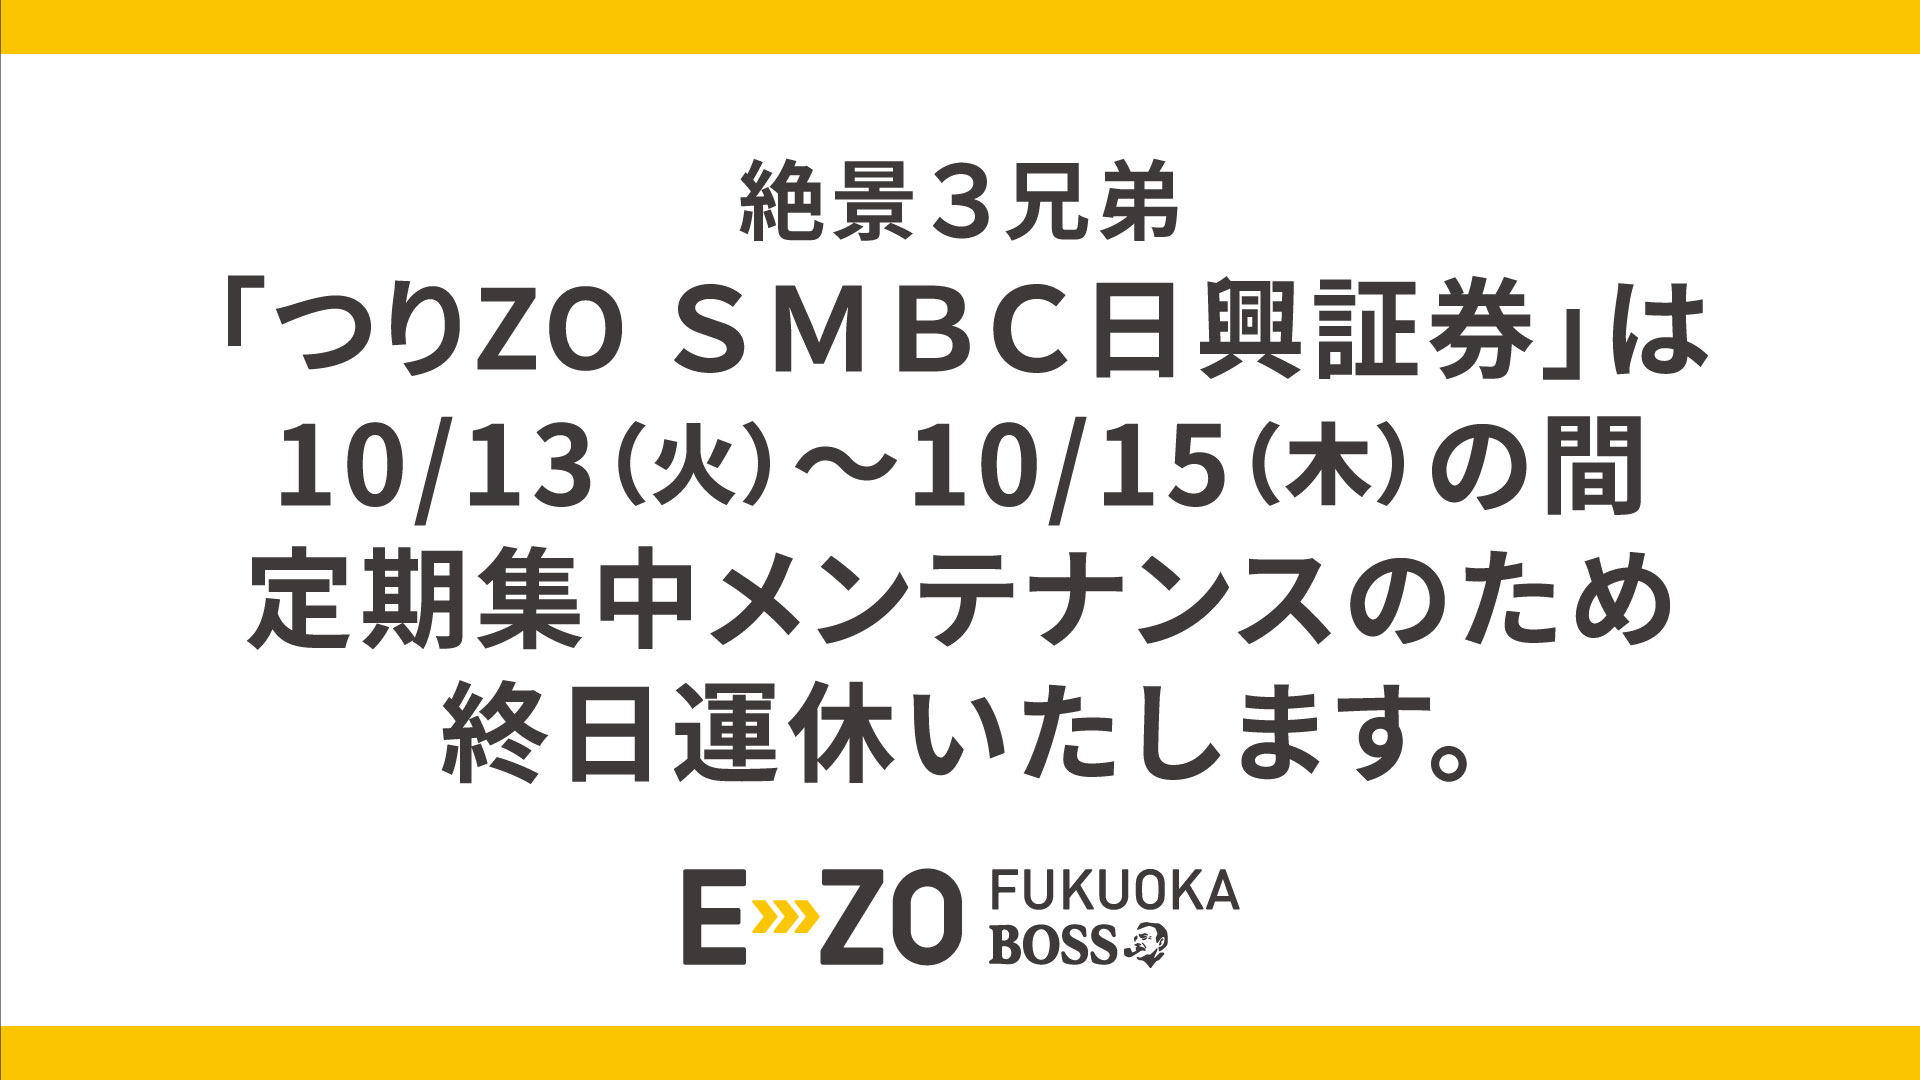 10/13 (Tue) -15 (Thu) &quot;Rail Coaster SMBC Nikko Securities&quot; All-day suspension